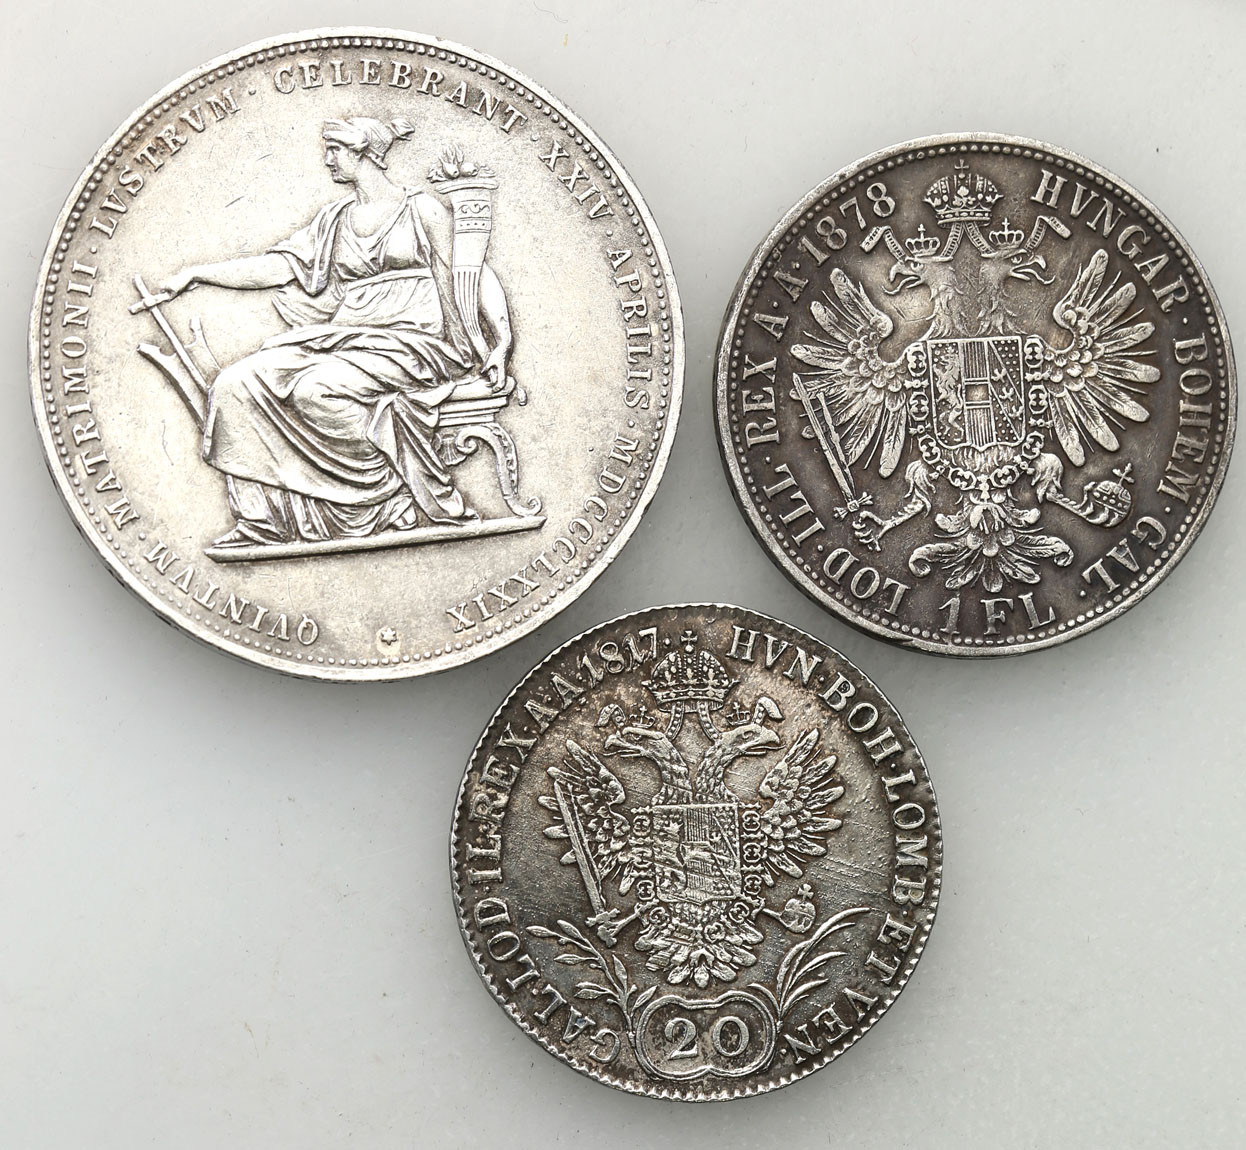 Austria. 2 guldeny 1879, floren 1878, 20 krajcarów 1817, zestaw 3 monet